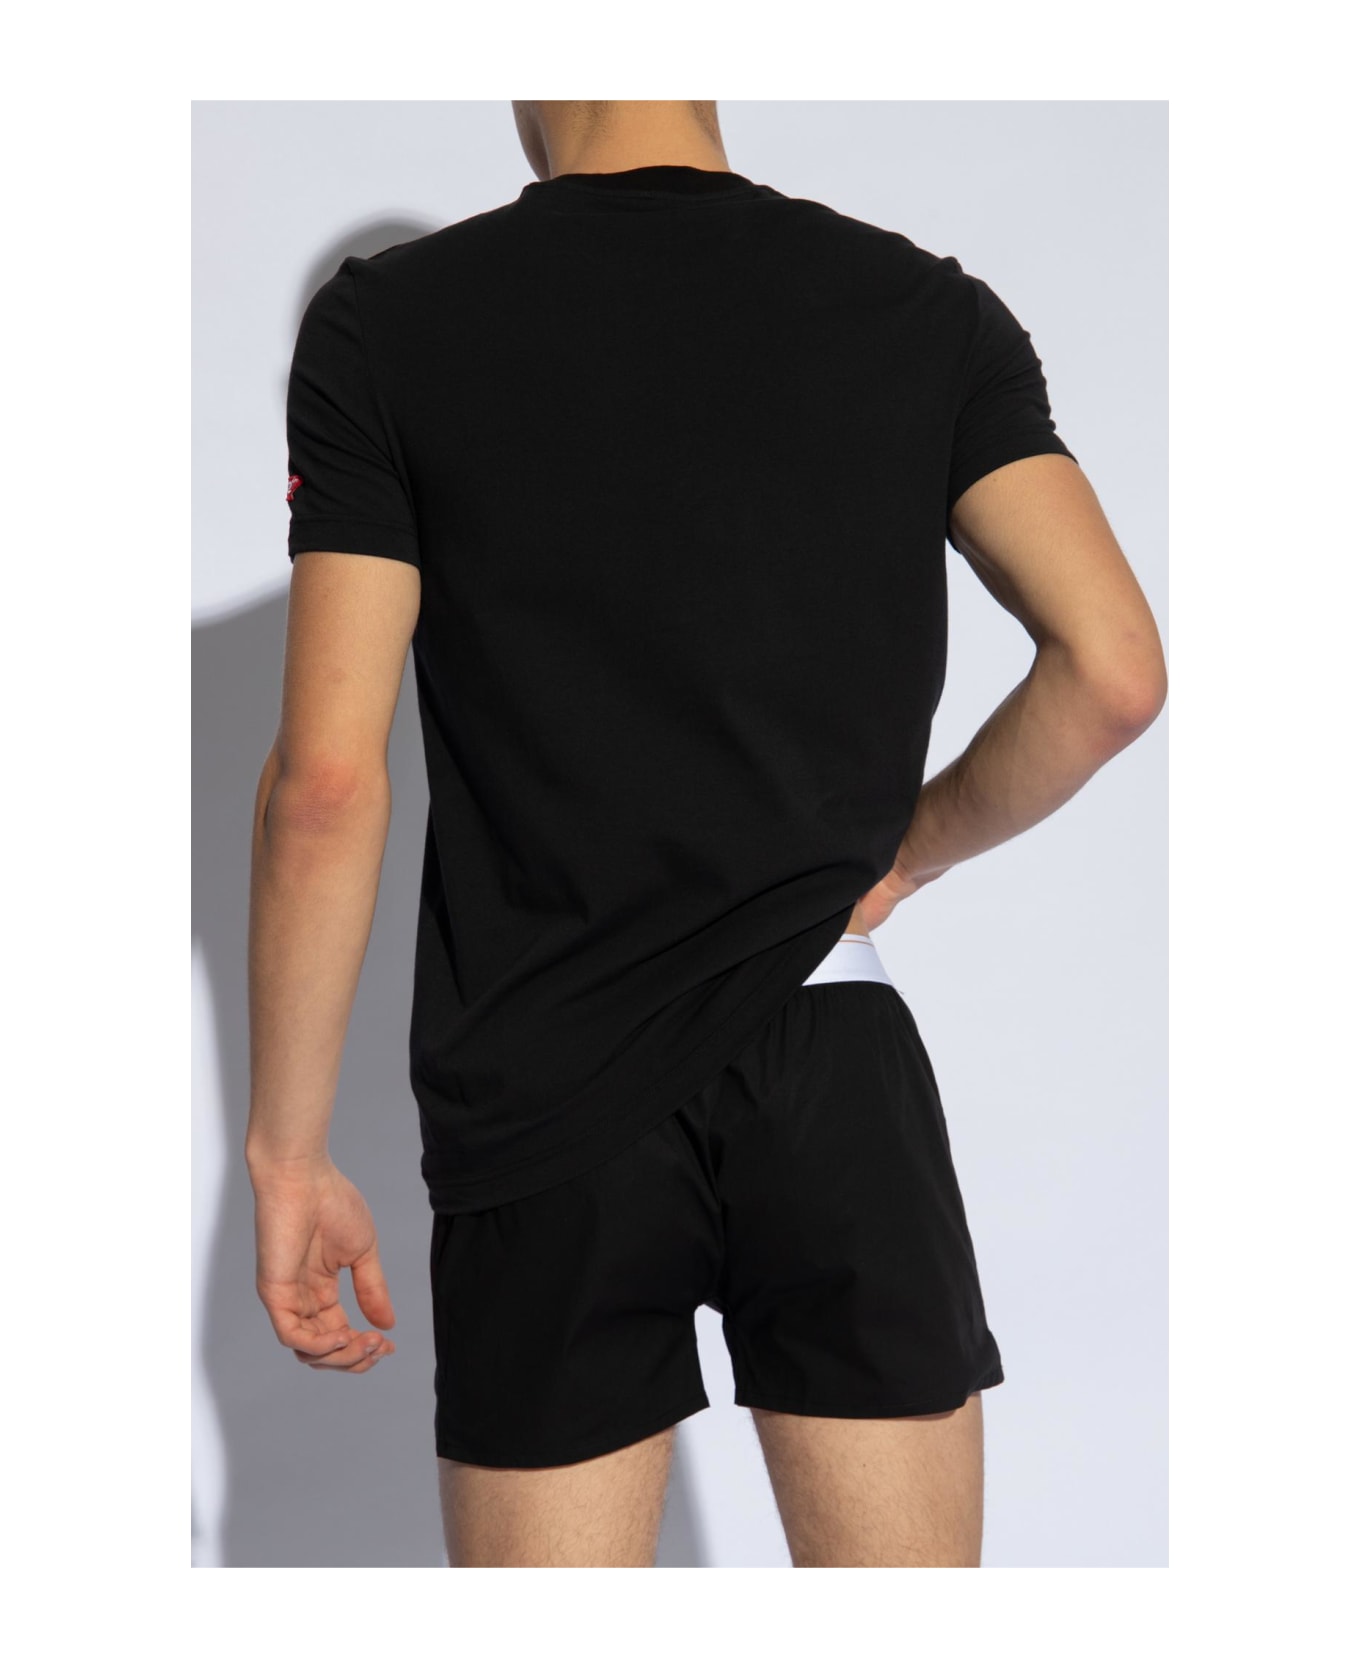 Dsquared2 'underwear' Collection T-shirt - Nero シャツ